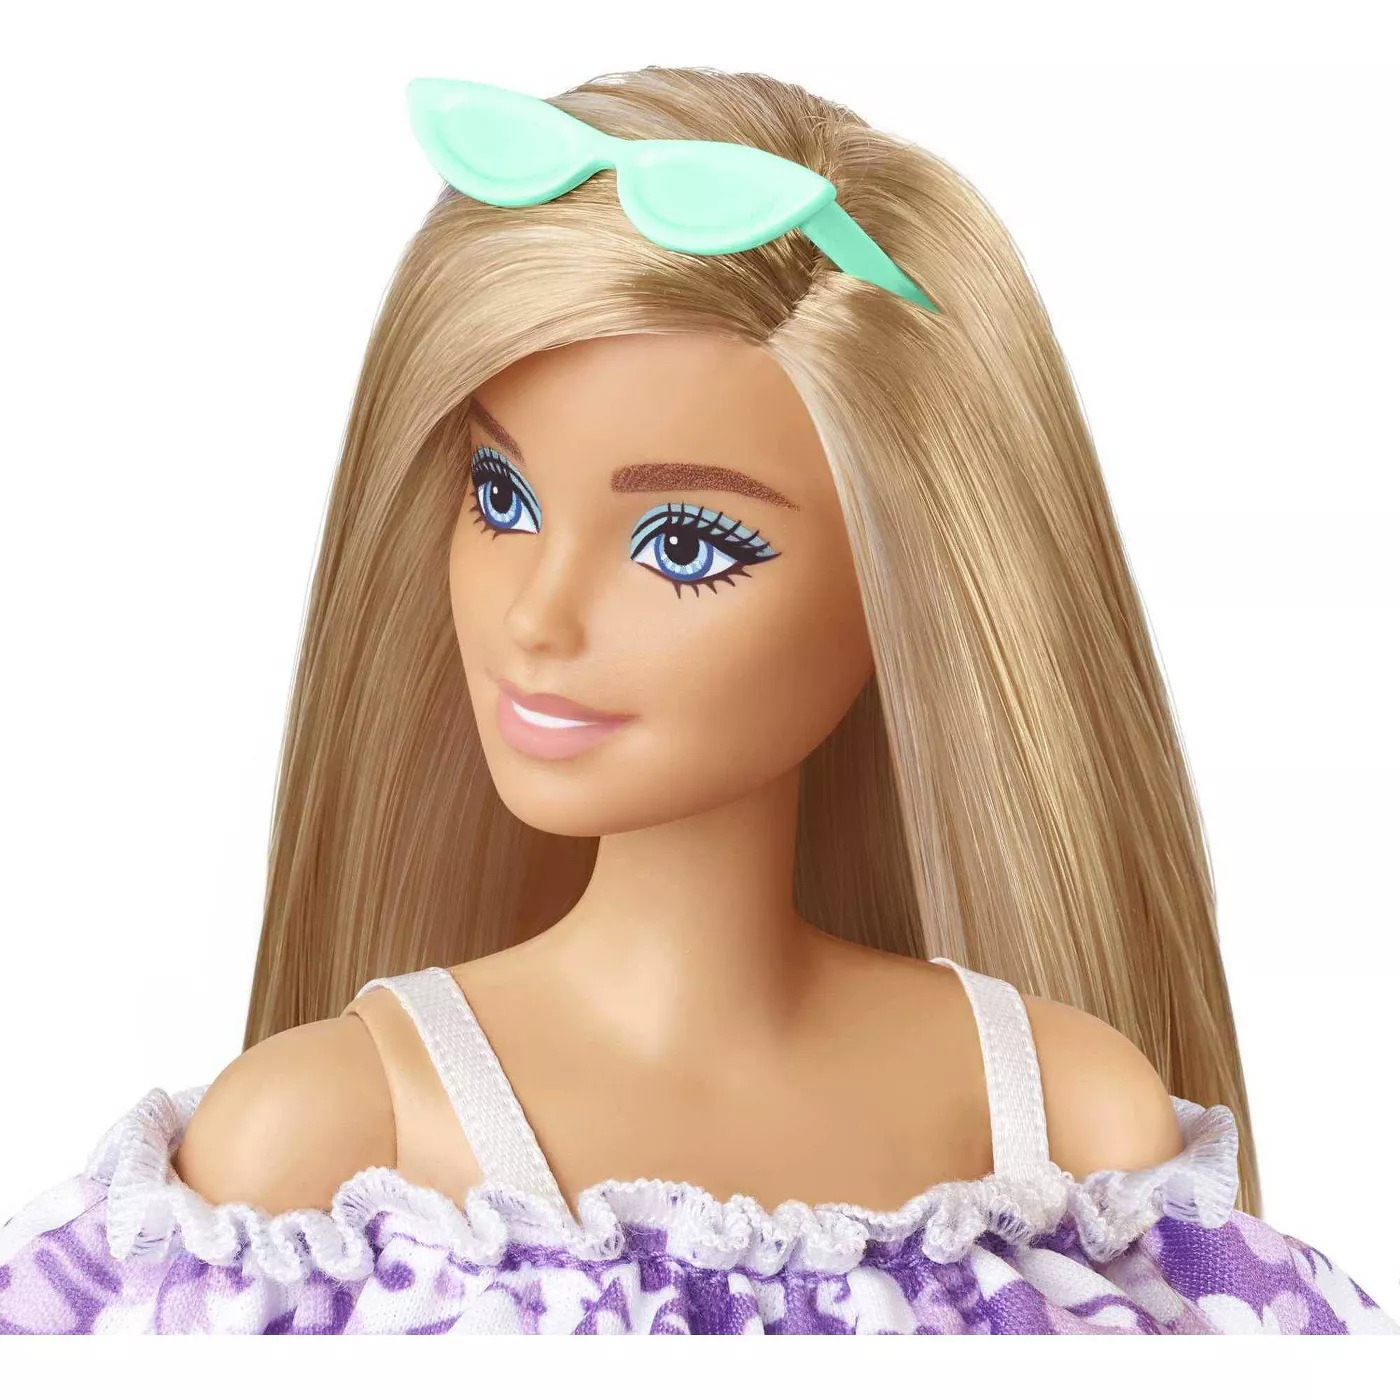 Barbie Loves the Ocean Doll Floral Dress